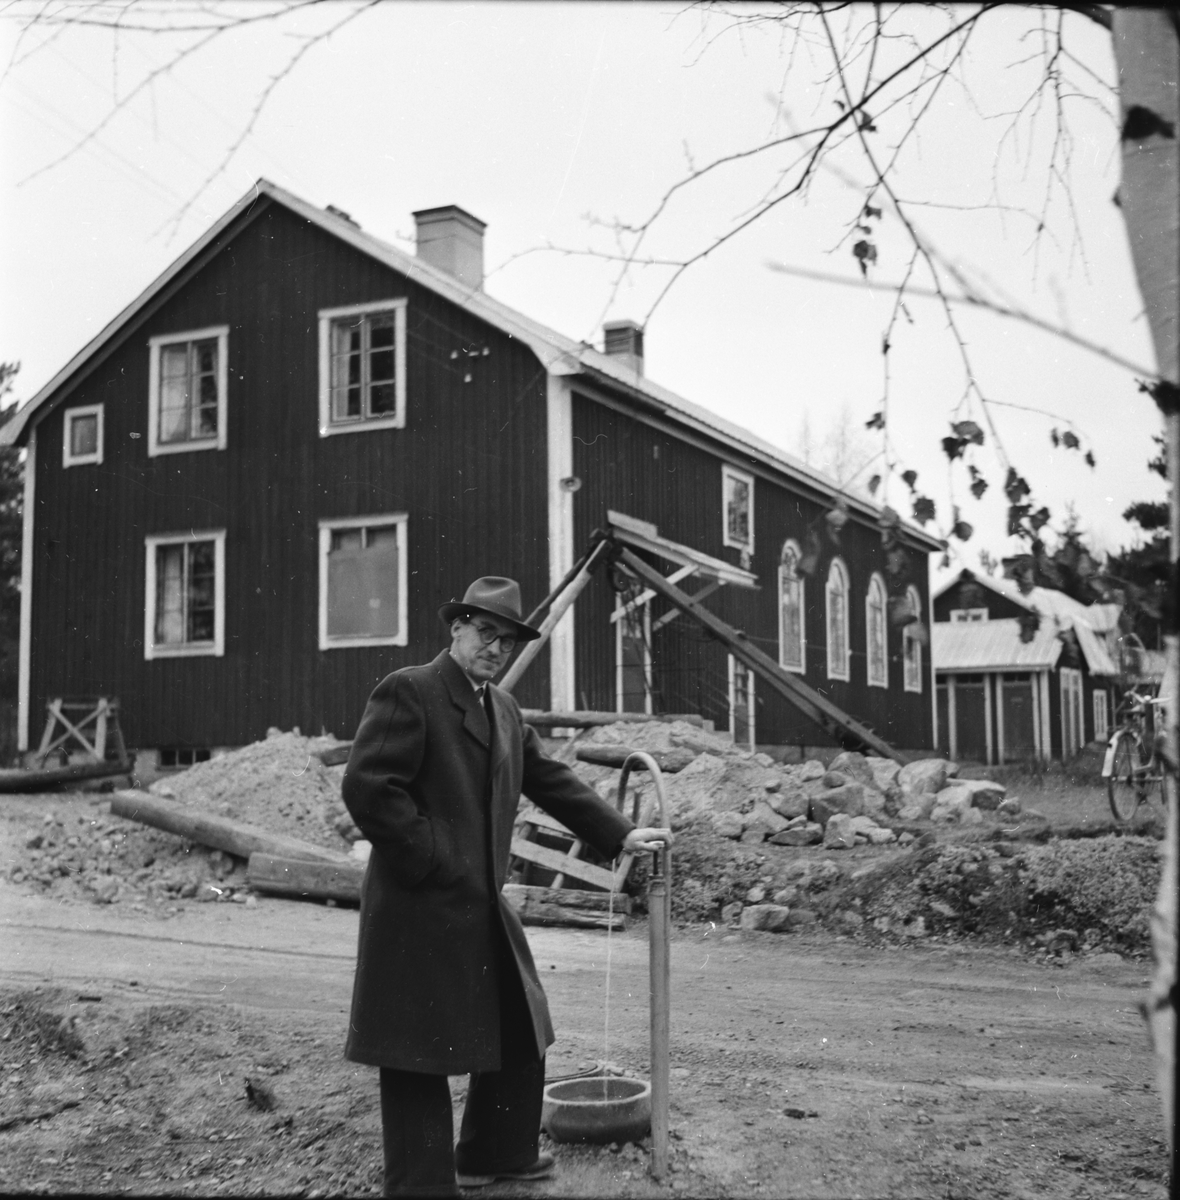 Stridell, Stenberg.
Östanbo-Östansjö 1952